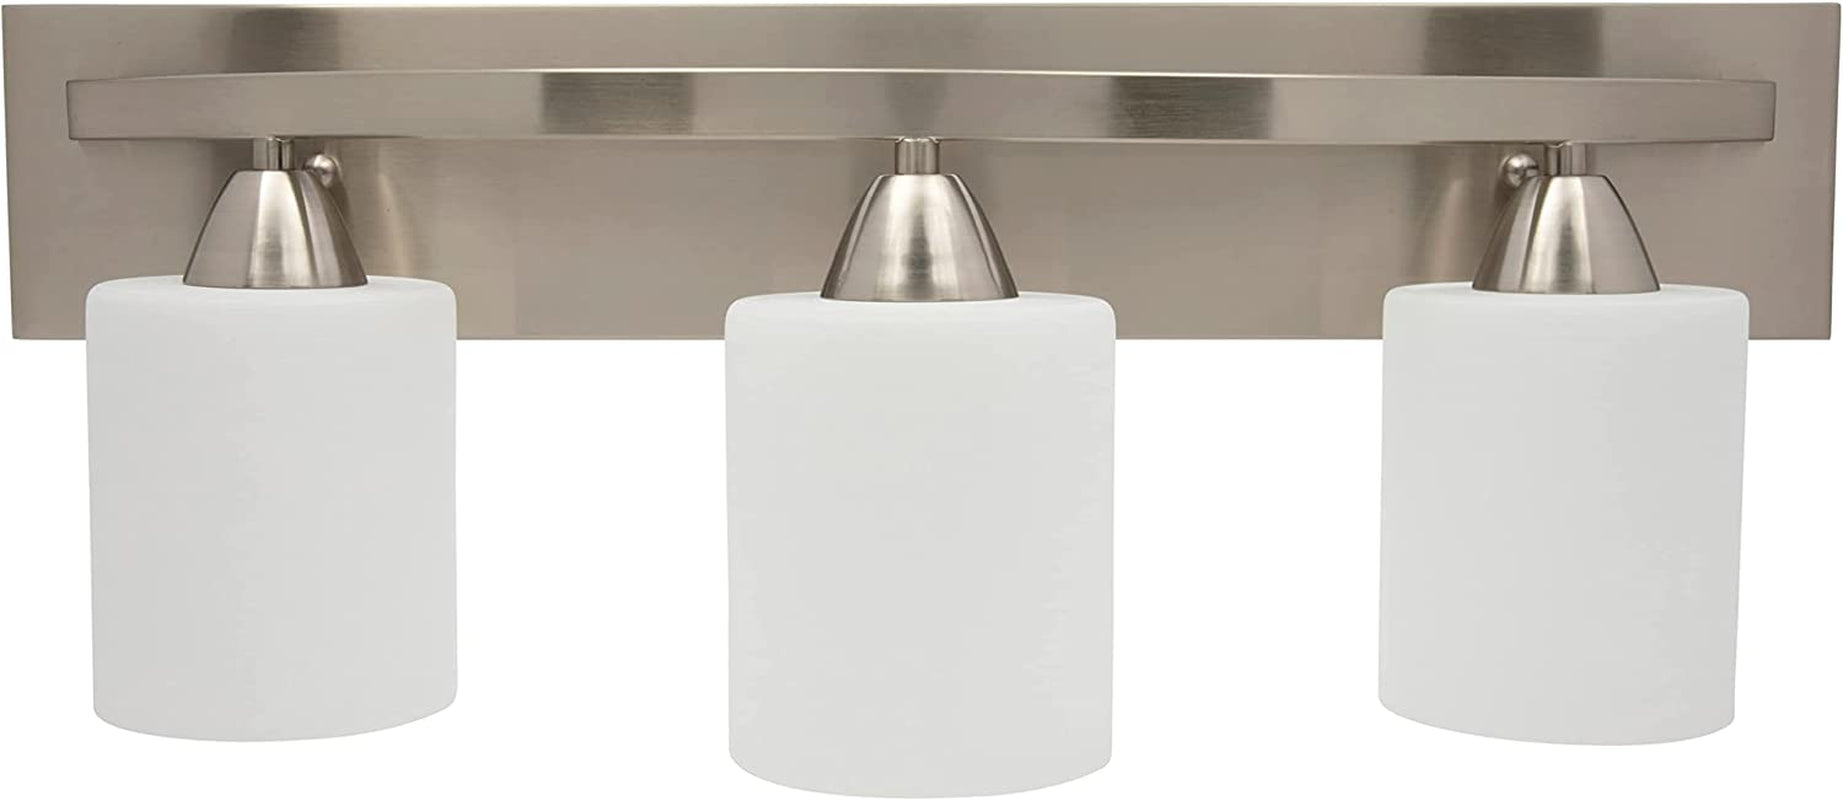 | Bathroom Vanity Light Bar | Interior Bathroom Lighting Fixtures with Modern Glass Shade | Bathroom Lights over Mirror | (Brushed Nickel, 3 Lights, E26 100W LED, Bulbs Not Included)